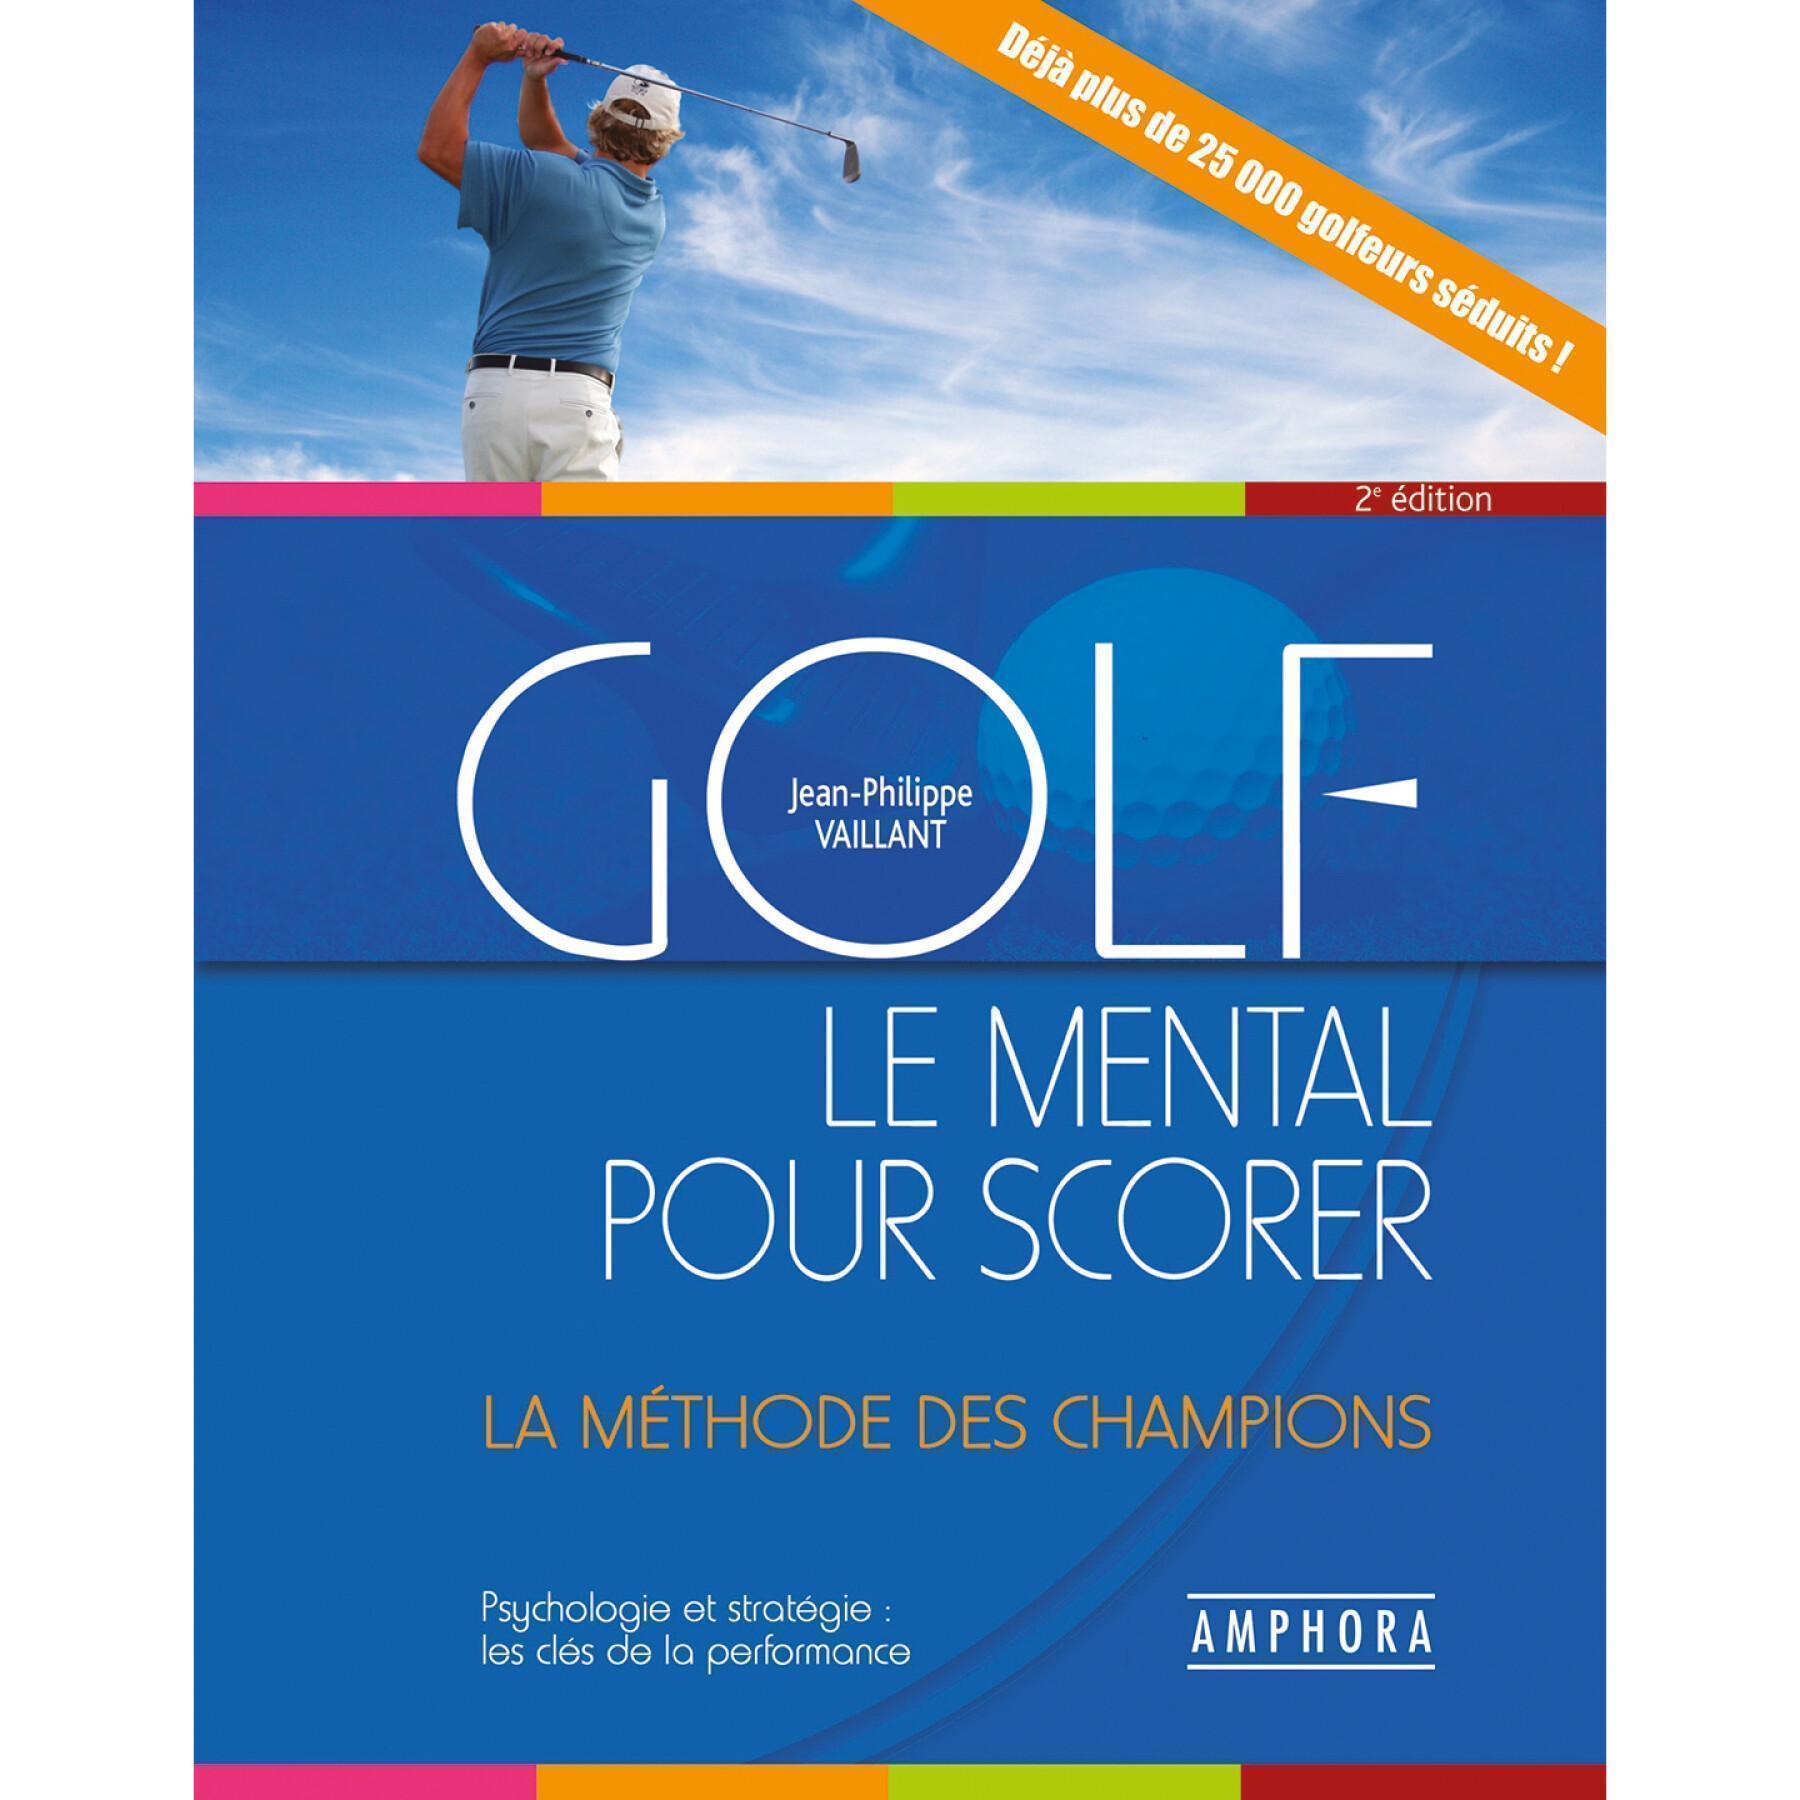 Golf book - the mind to score Amphora